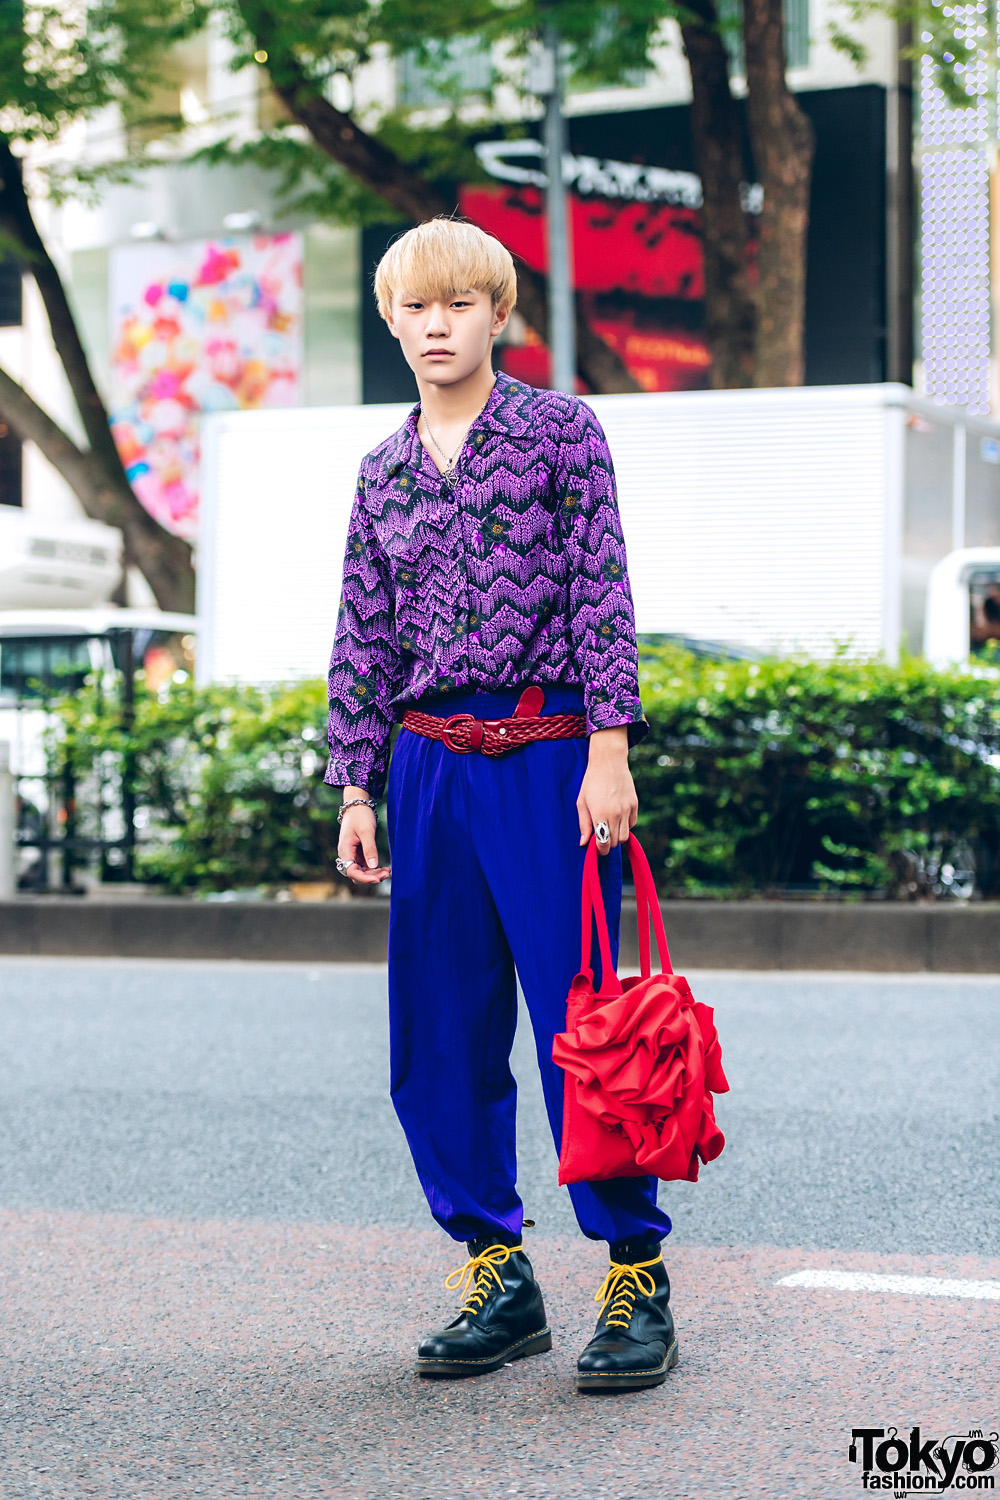 Harajuku Streetwear Style w/ Zigzag Shirt, Silver Jewelry, Shin Ruffle Bag & Maison Margiela Boots